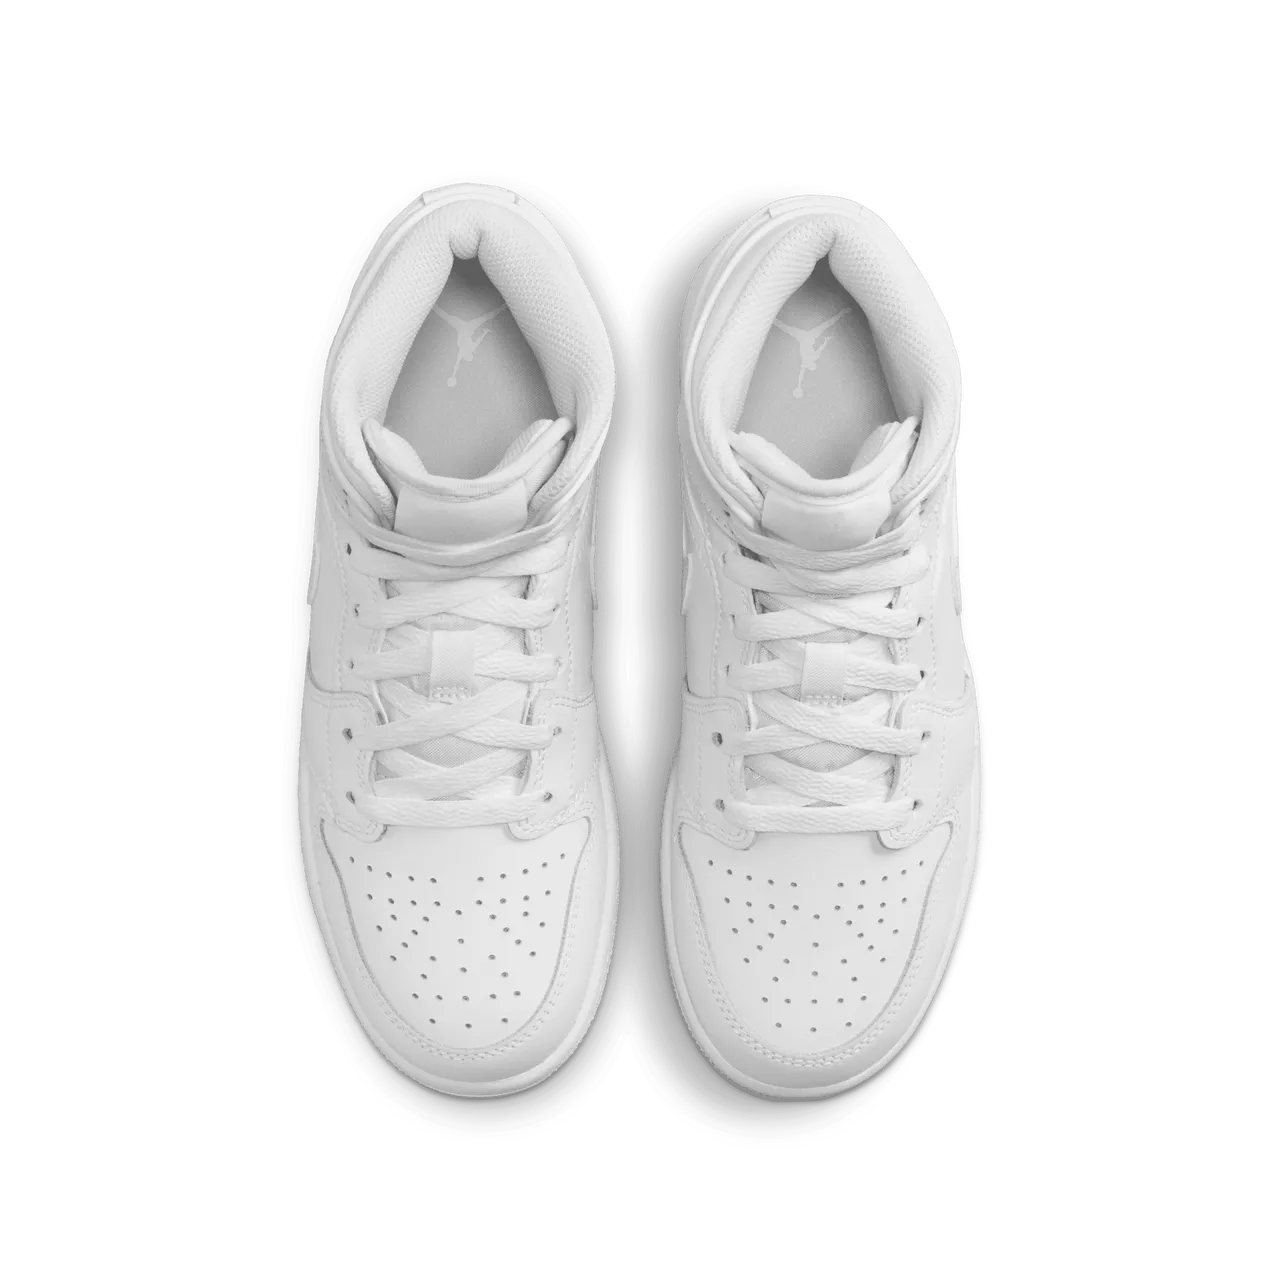 Jordan 1 Mid Schuh für ältere Kinder - Weiß